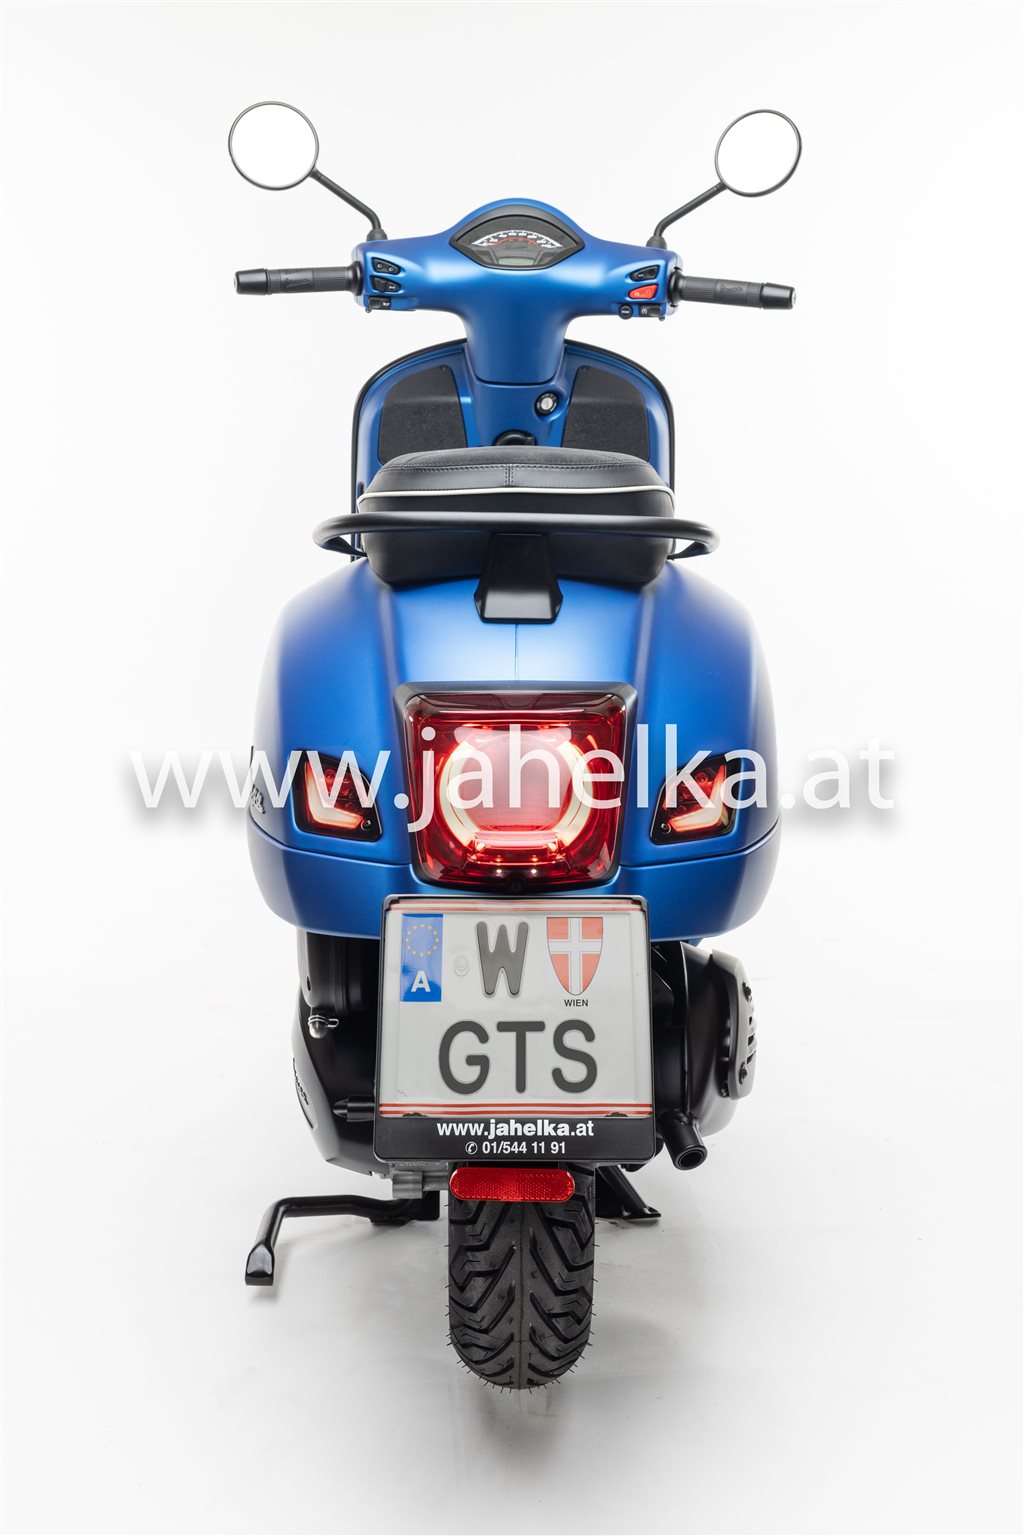 Details zum Custom-Bike Vespa GTS 300 i.e. Super Sport des Händlers Jahelka  Zweirad Gmbh & Co KG